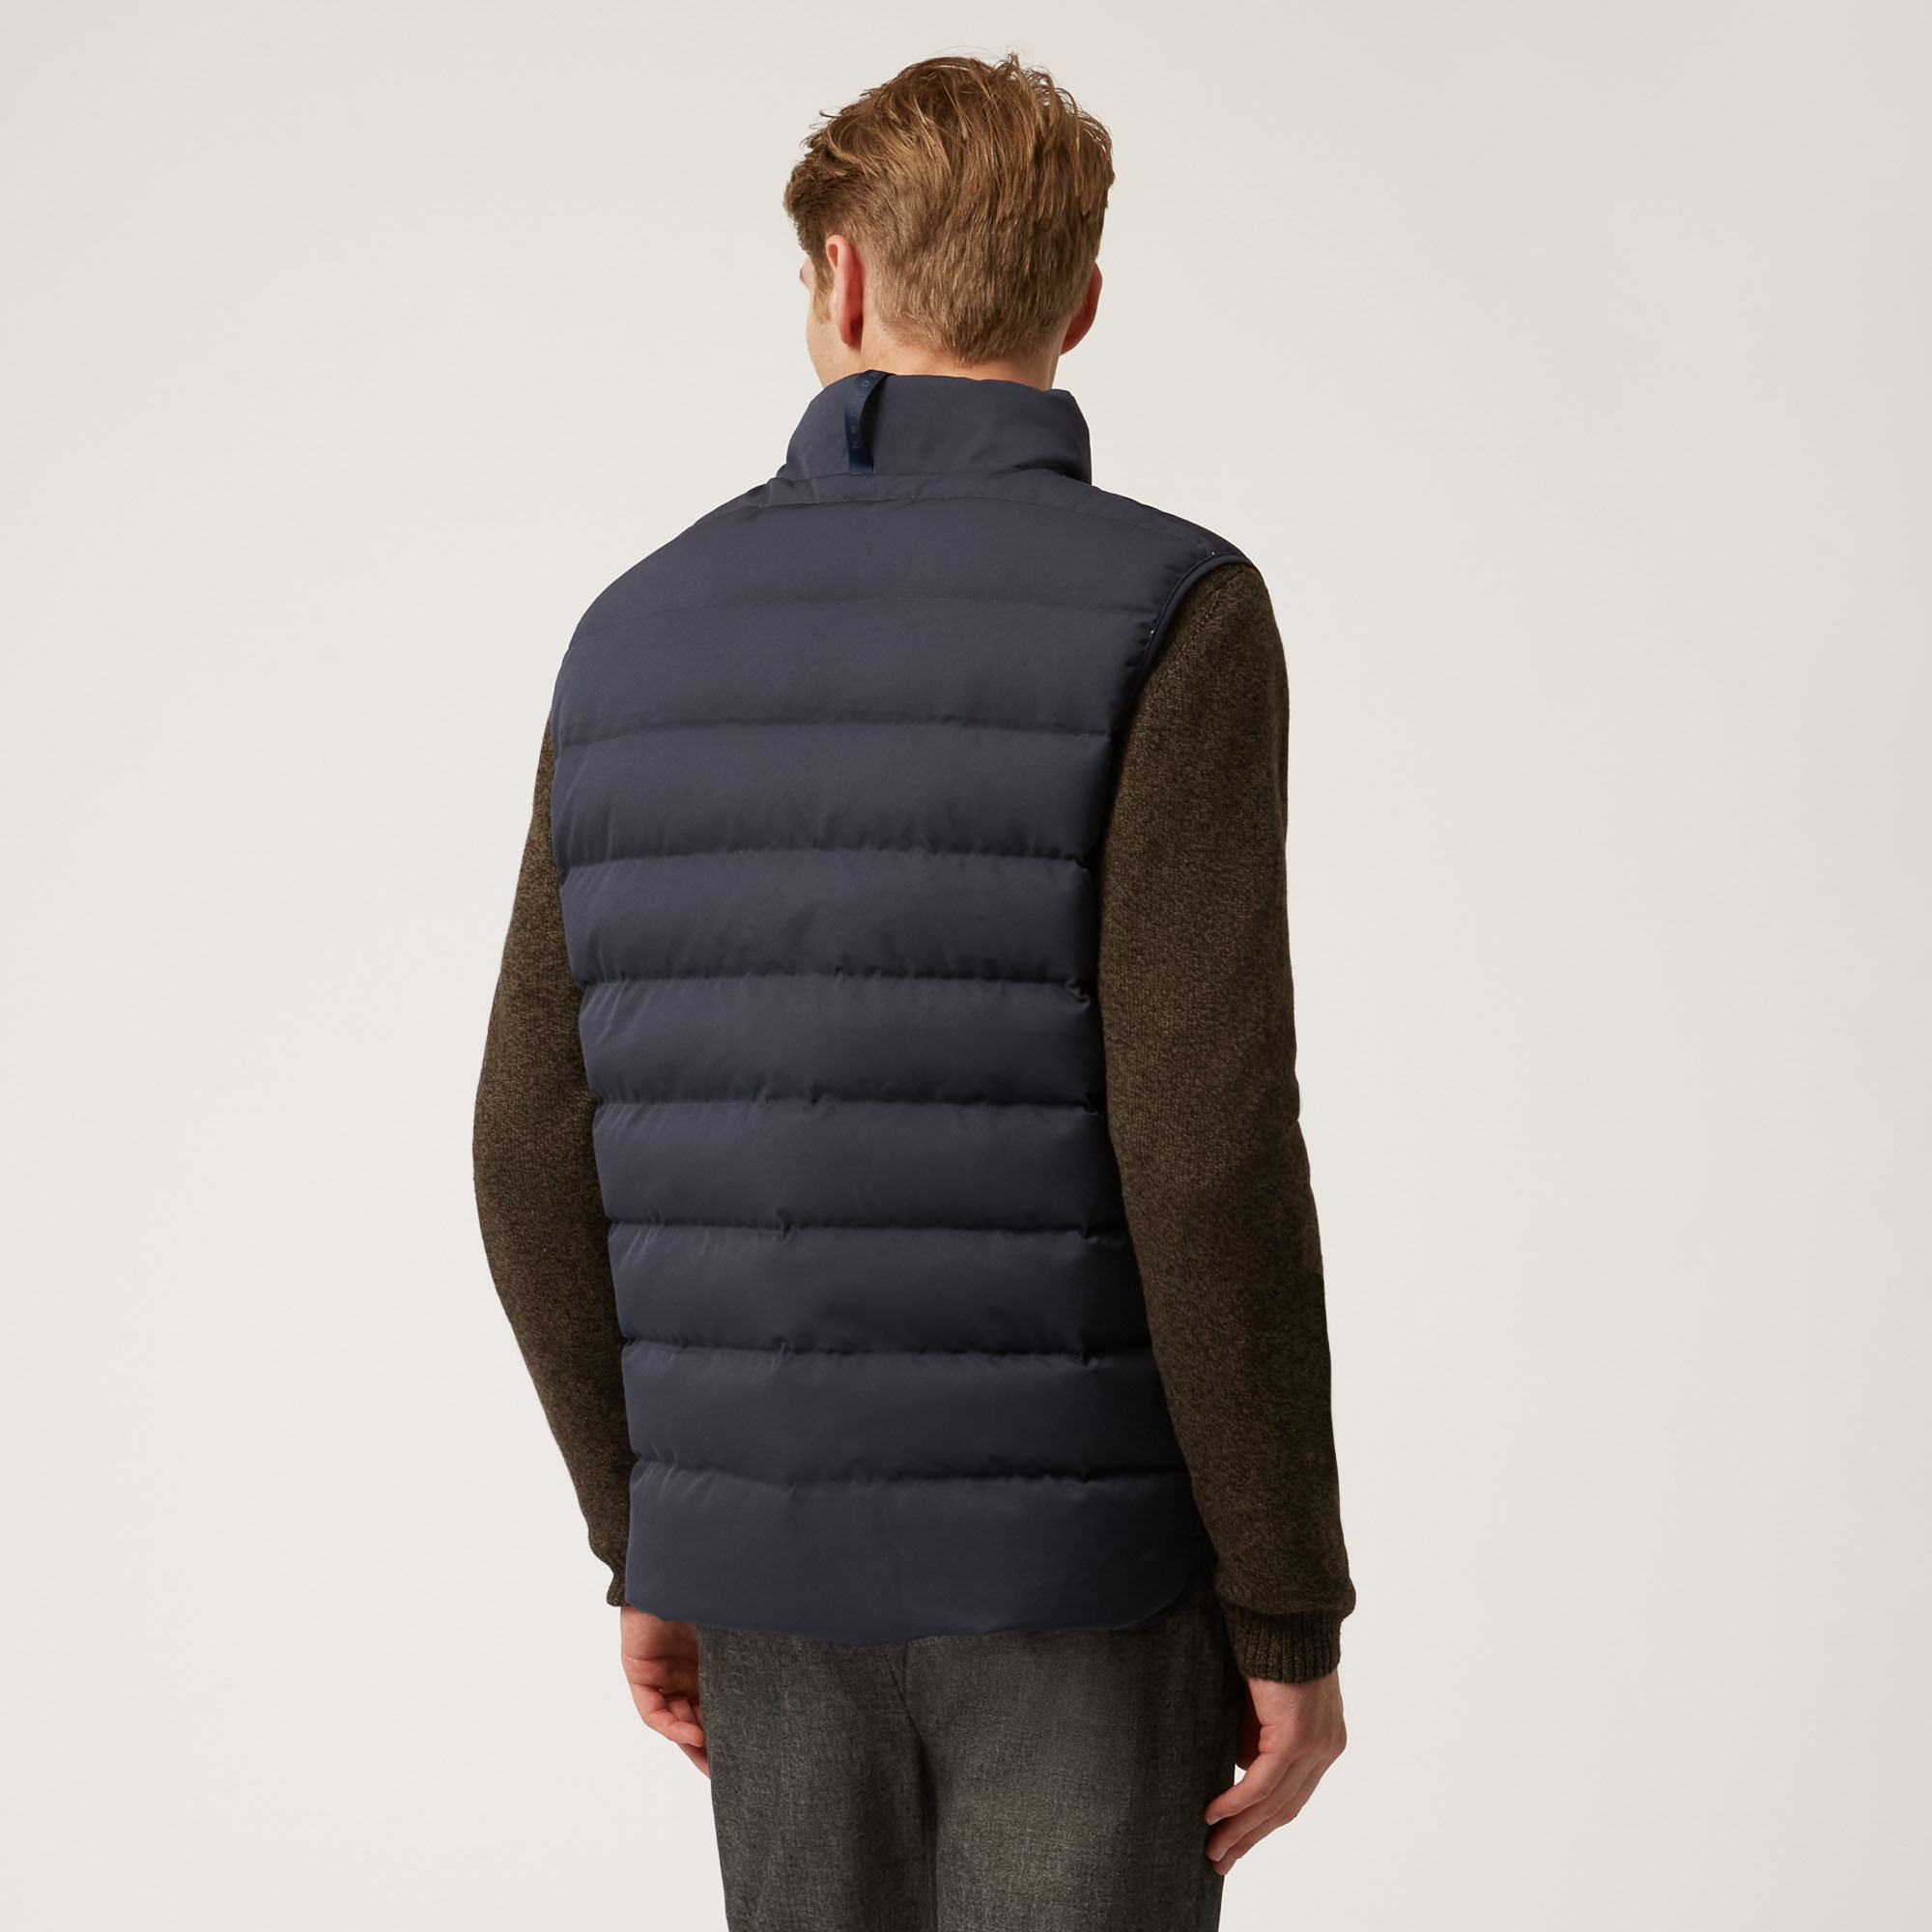 Art Academy Reversible Padded Vest, Brown, large image number 1